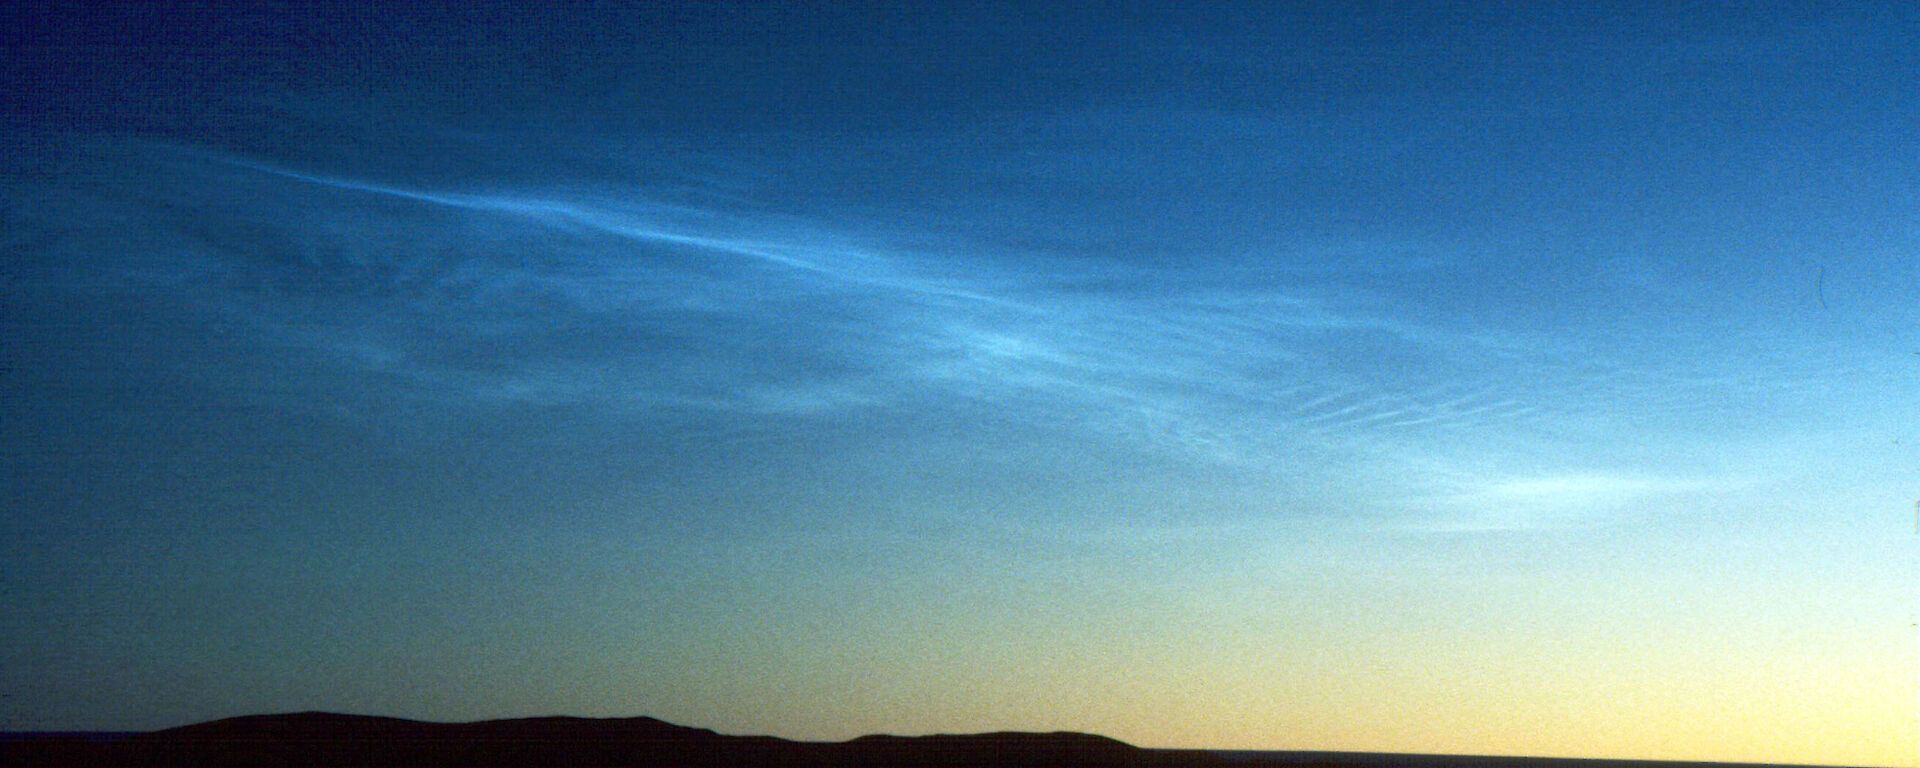 Noctilucent clouds (ice clouds) above Davis station